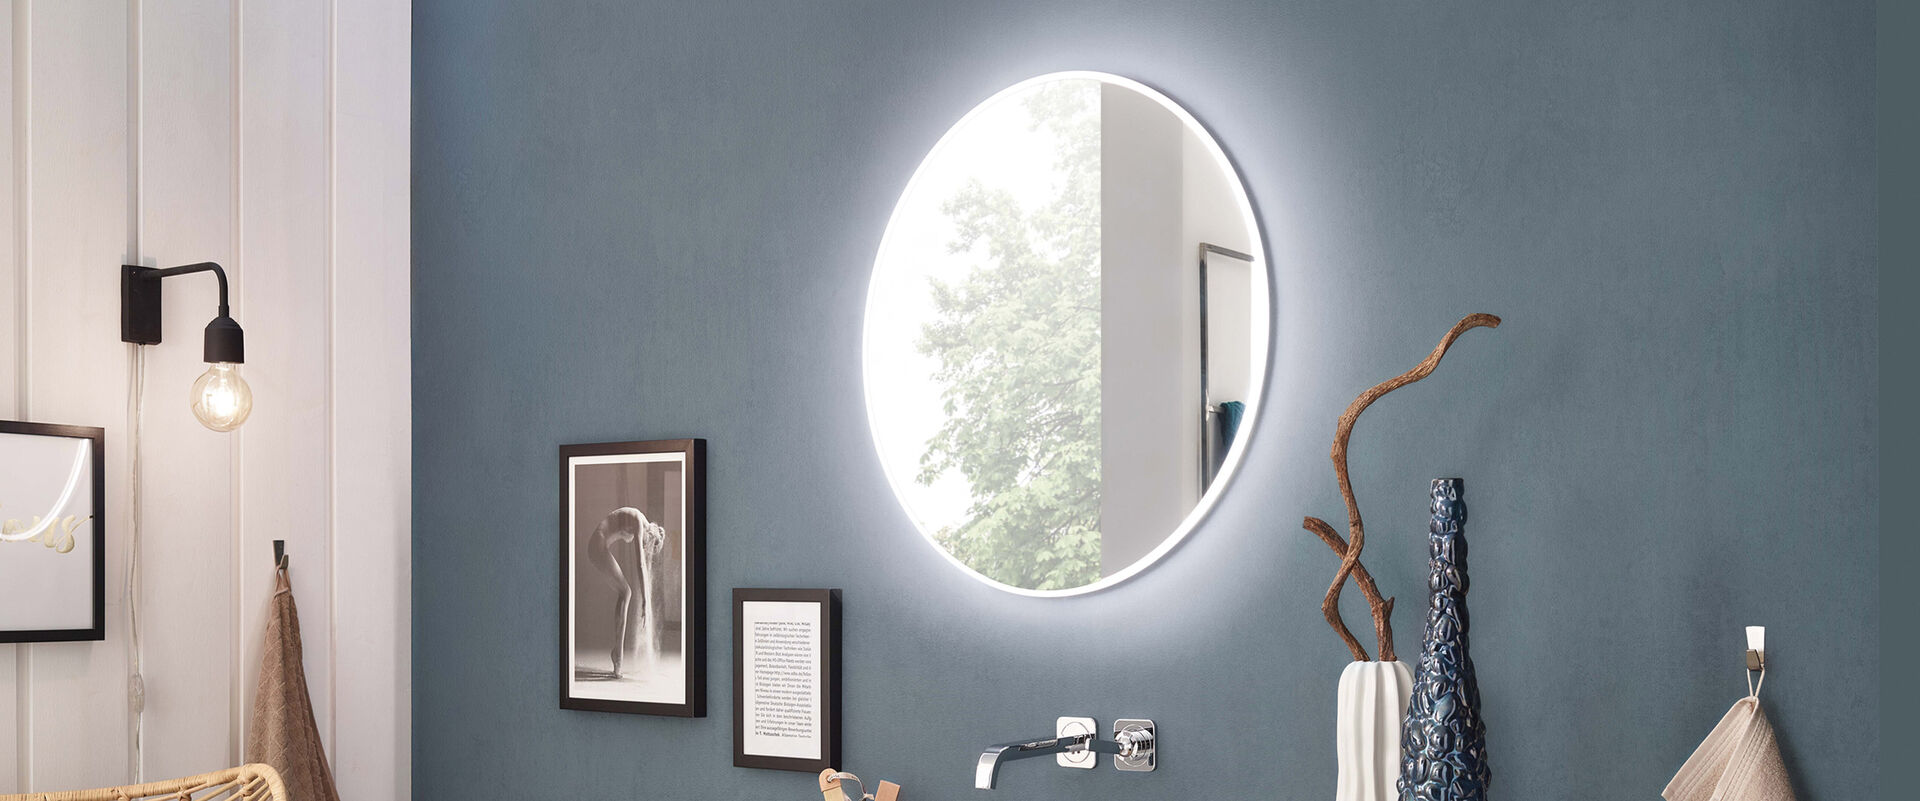 Runder Badspiegel Led Beleuchtung Smart Line Sprinz Splash Bad